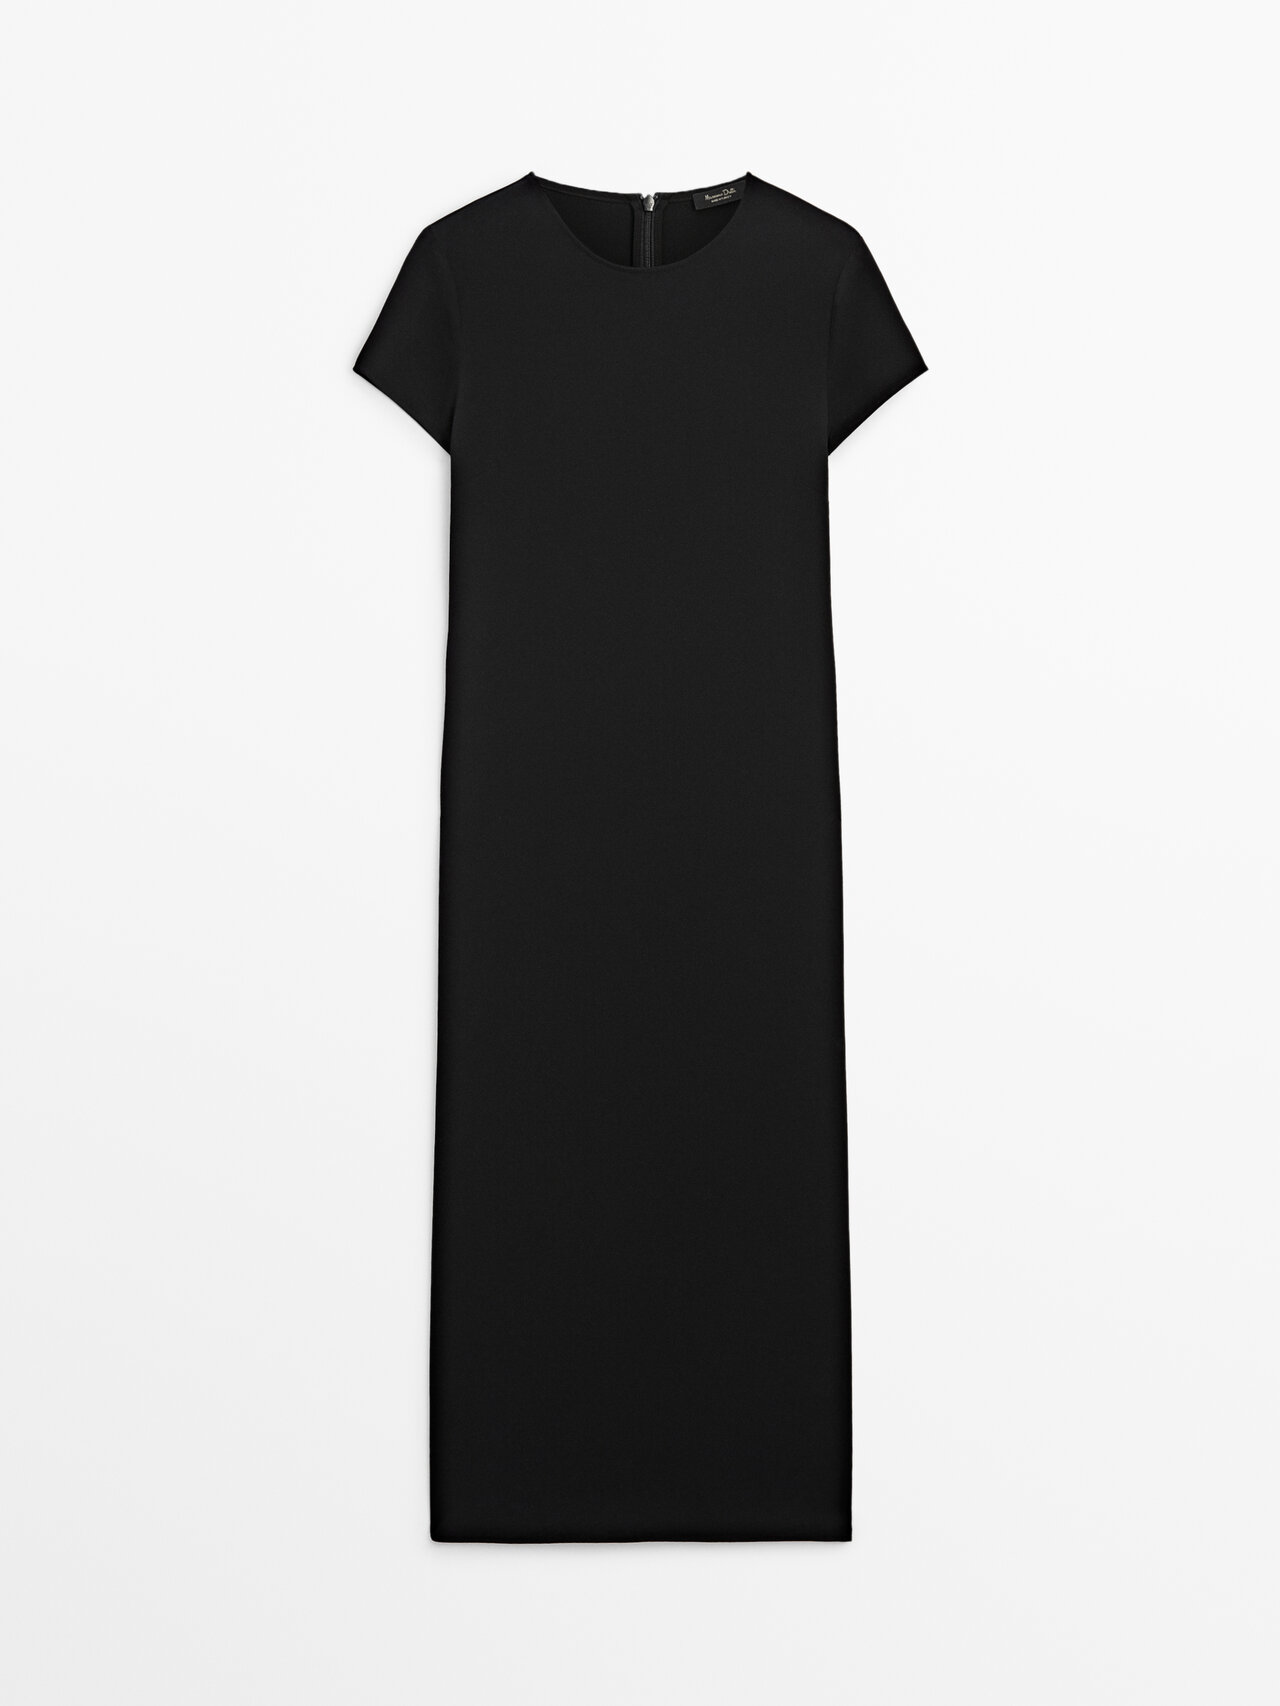 Massimo Dutti Short Sleeve Black Dress